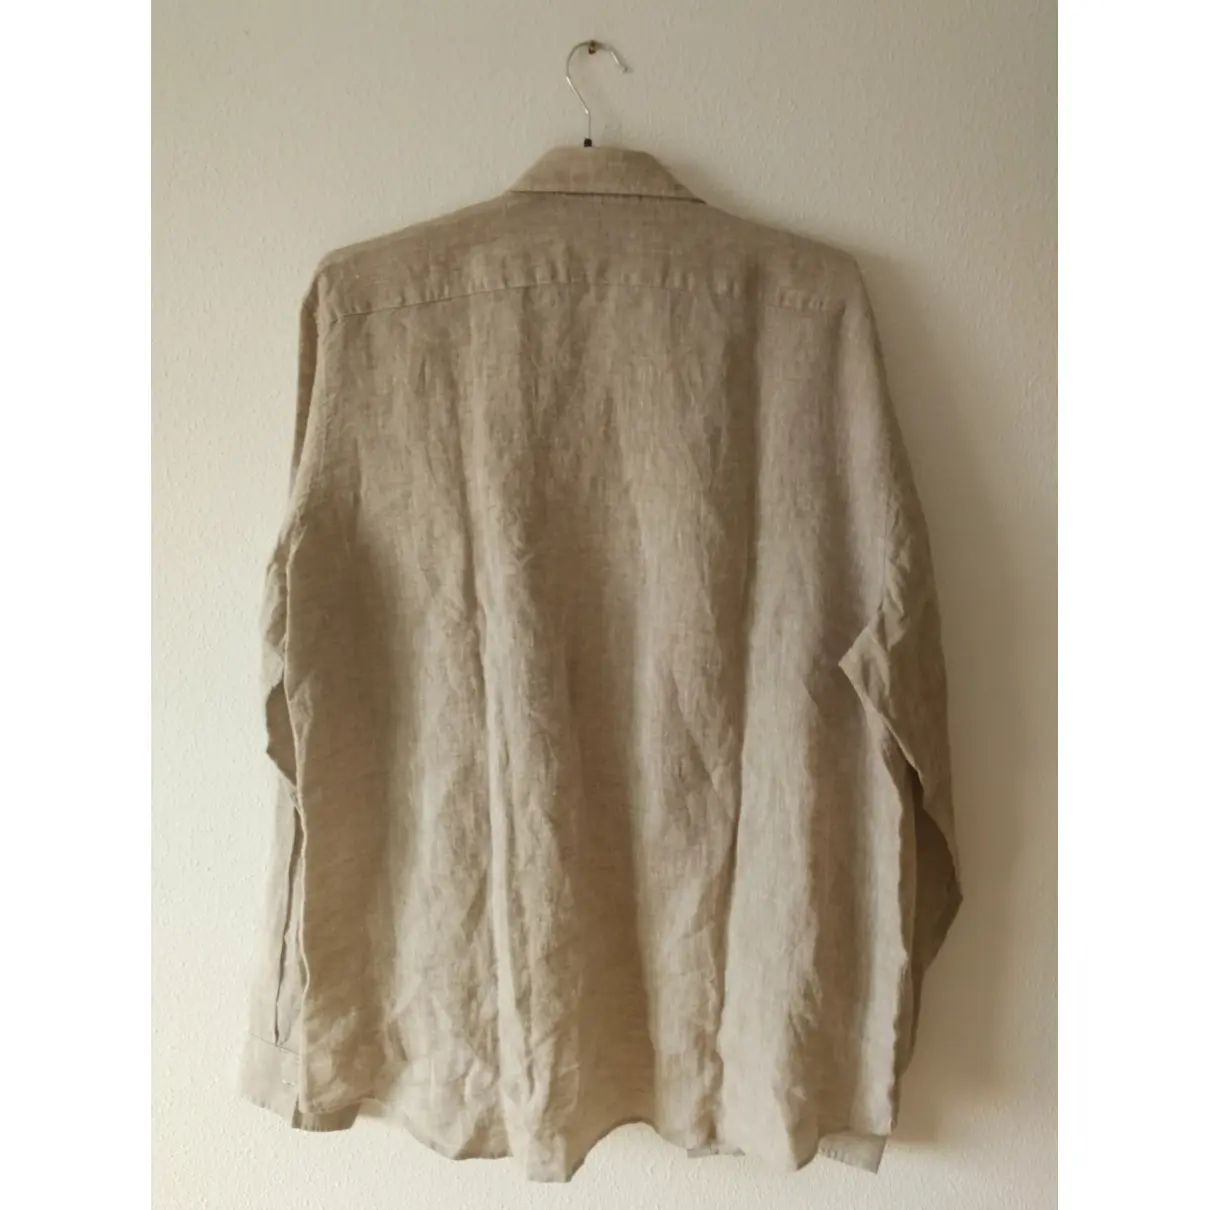 Buy Michael Kors Linen shirt online